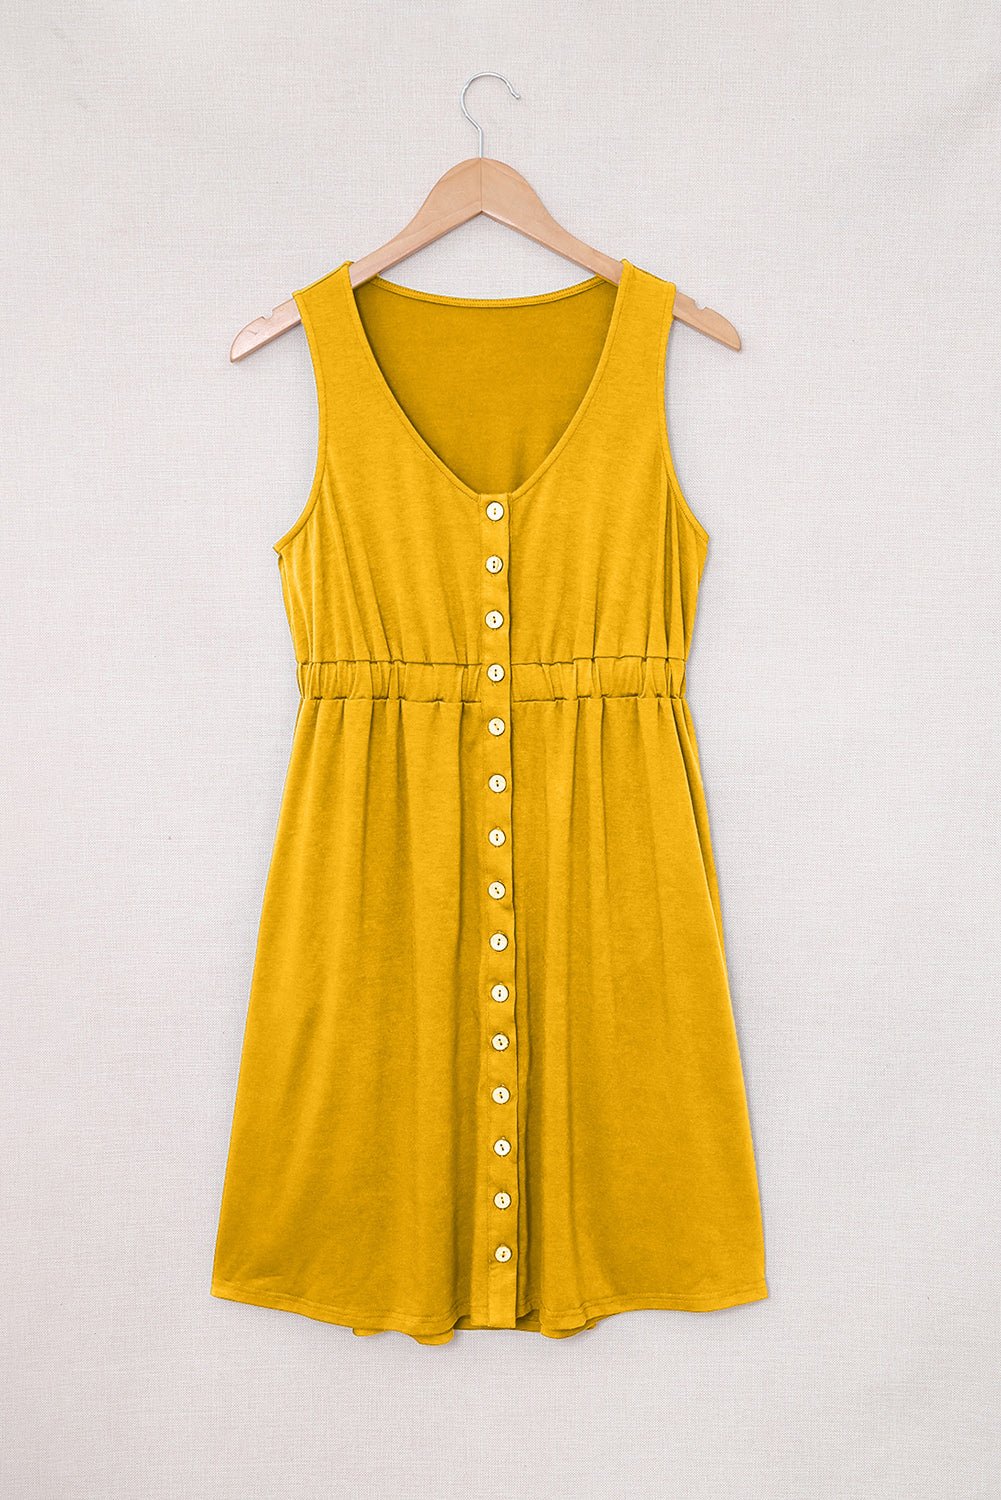 Sleeveless Button Down Mini Dress  | KIKI COUTURE-Women's Clothing, Designer Fashions, Shoes, Bags